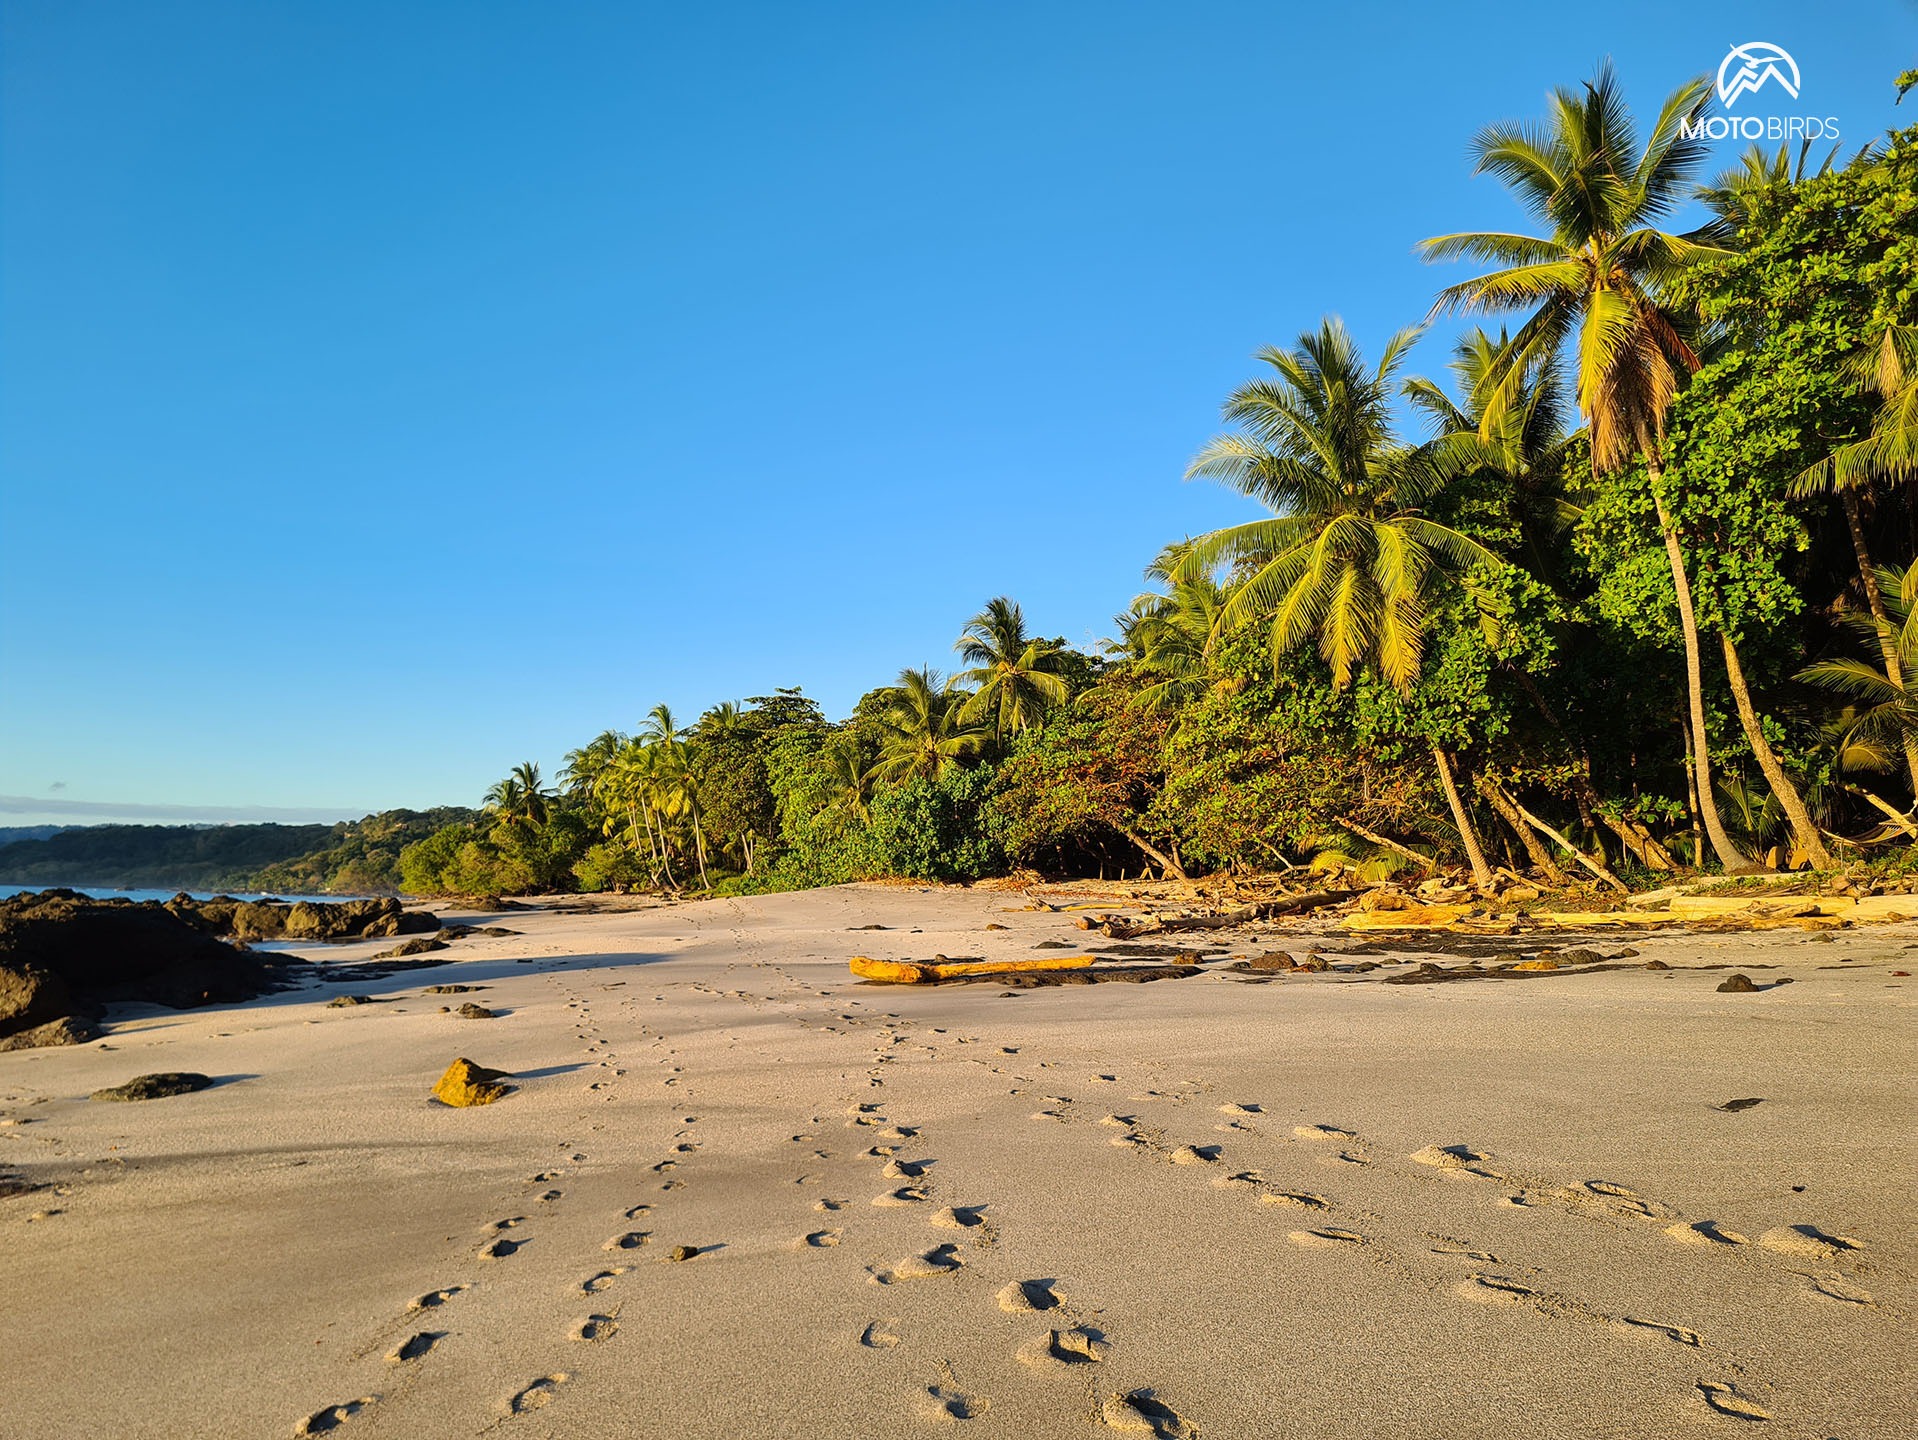 Stunning sandy beach in Costa Rica